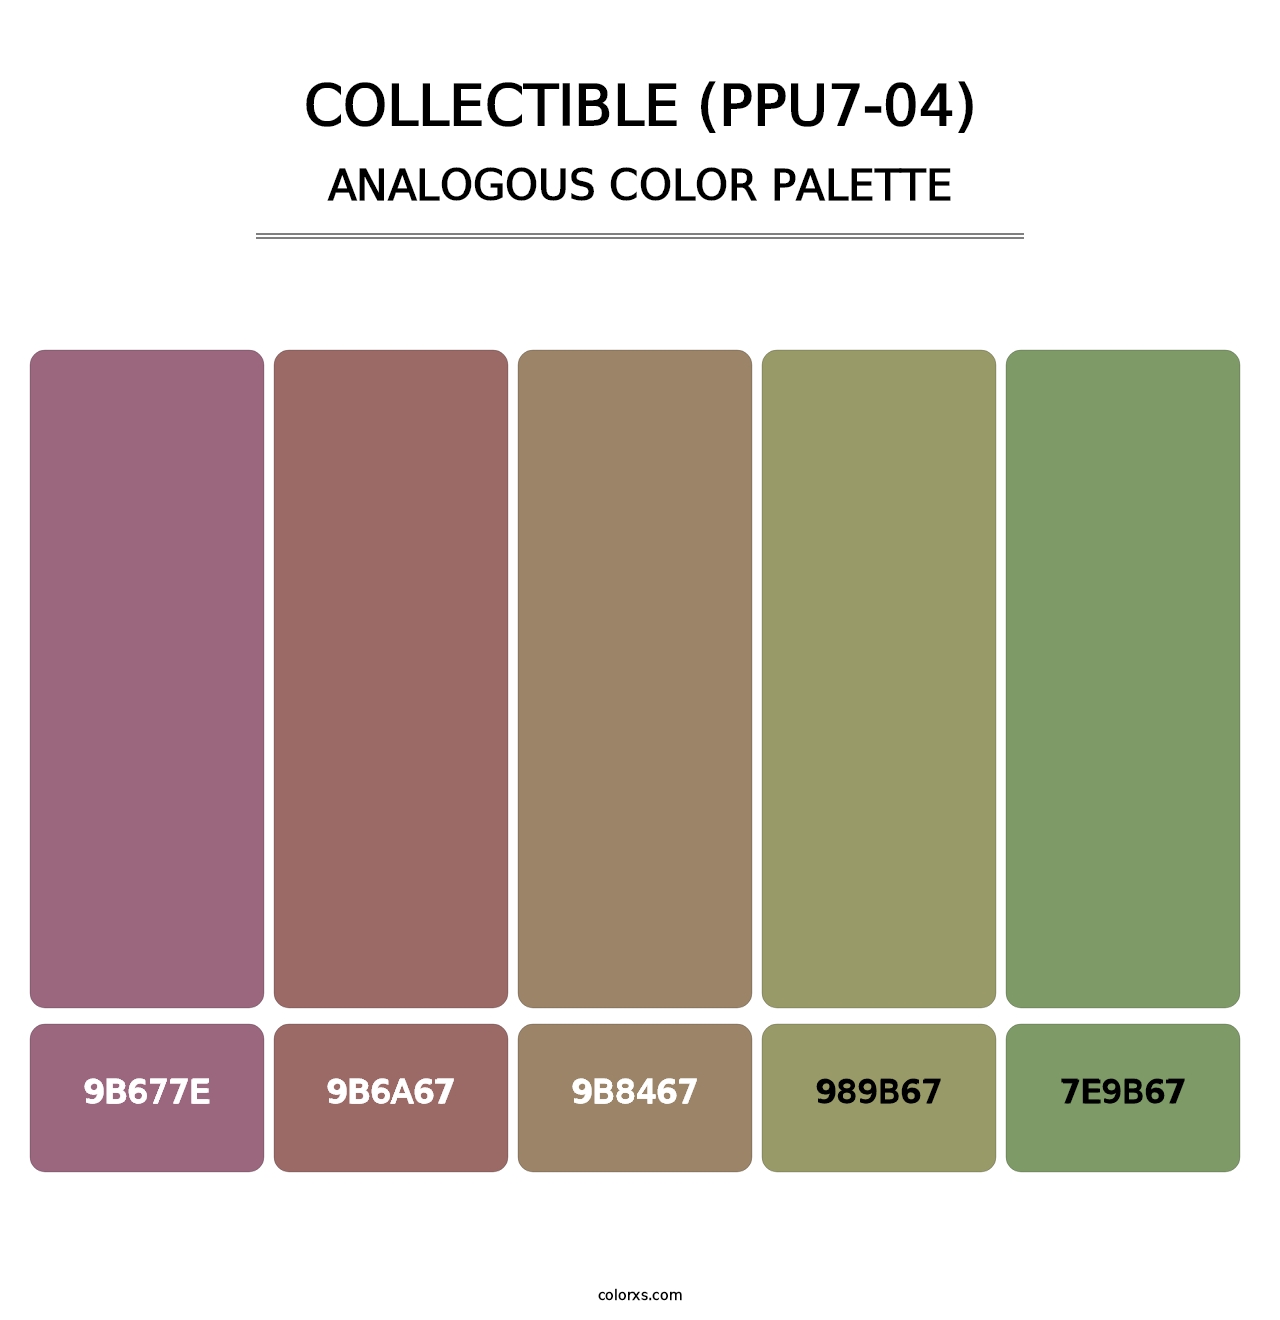 Collectible (PPU7-04) - Analogous Color Palette